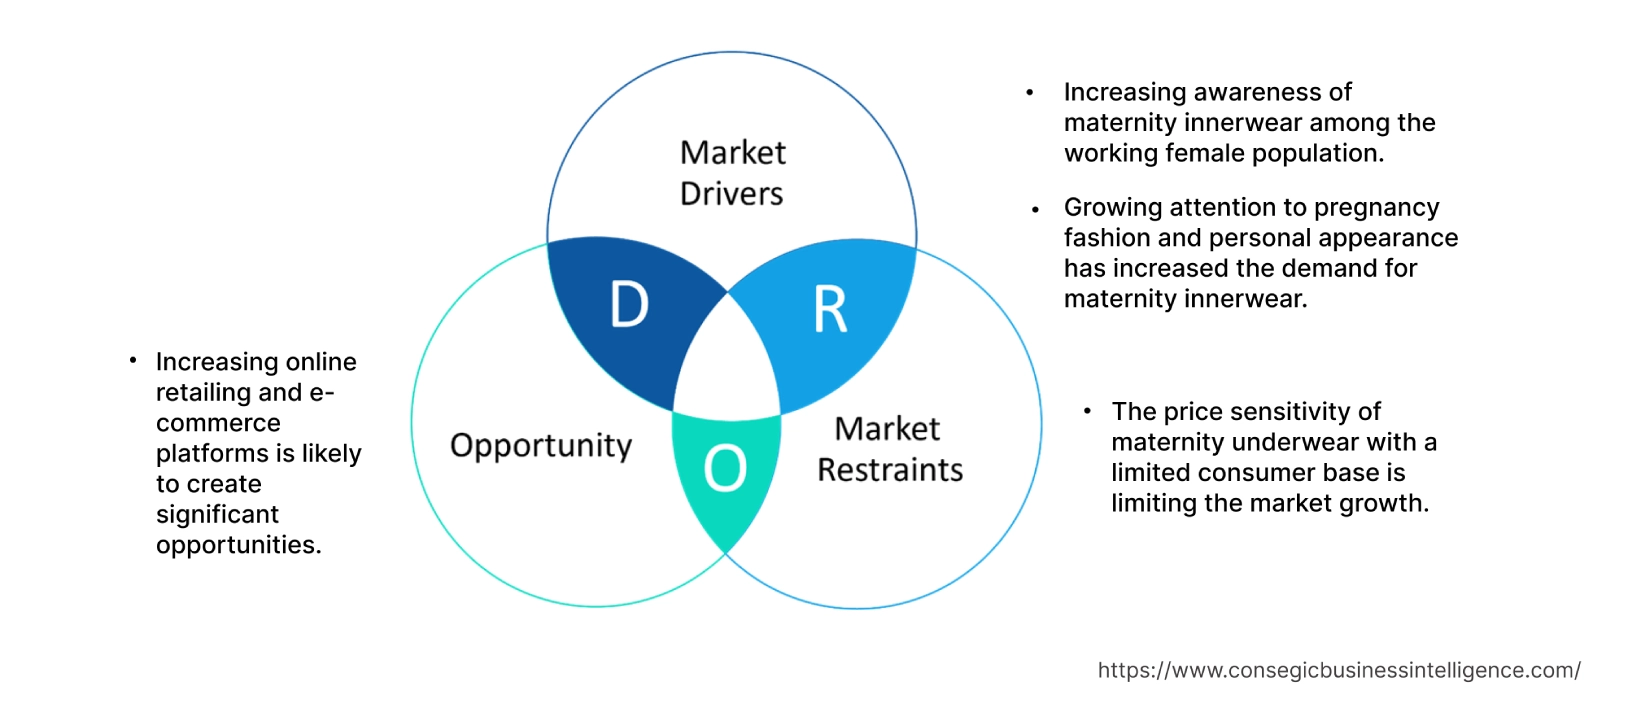 Maternity Innerwear Market Dynamics